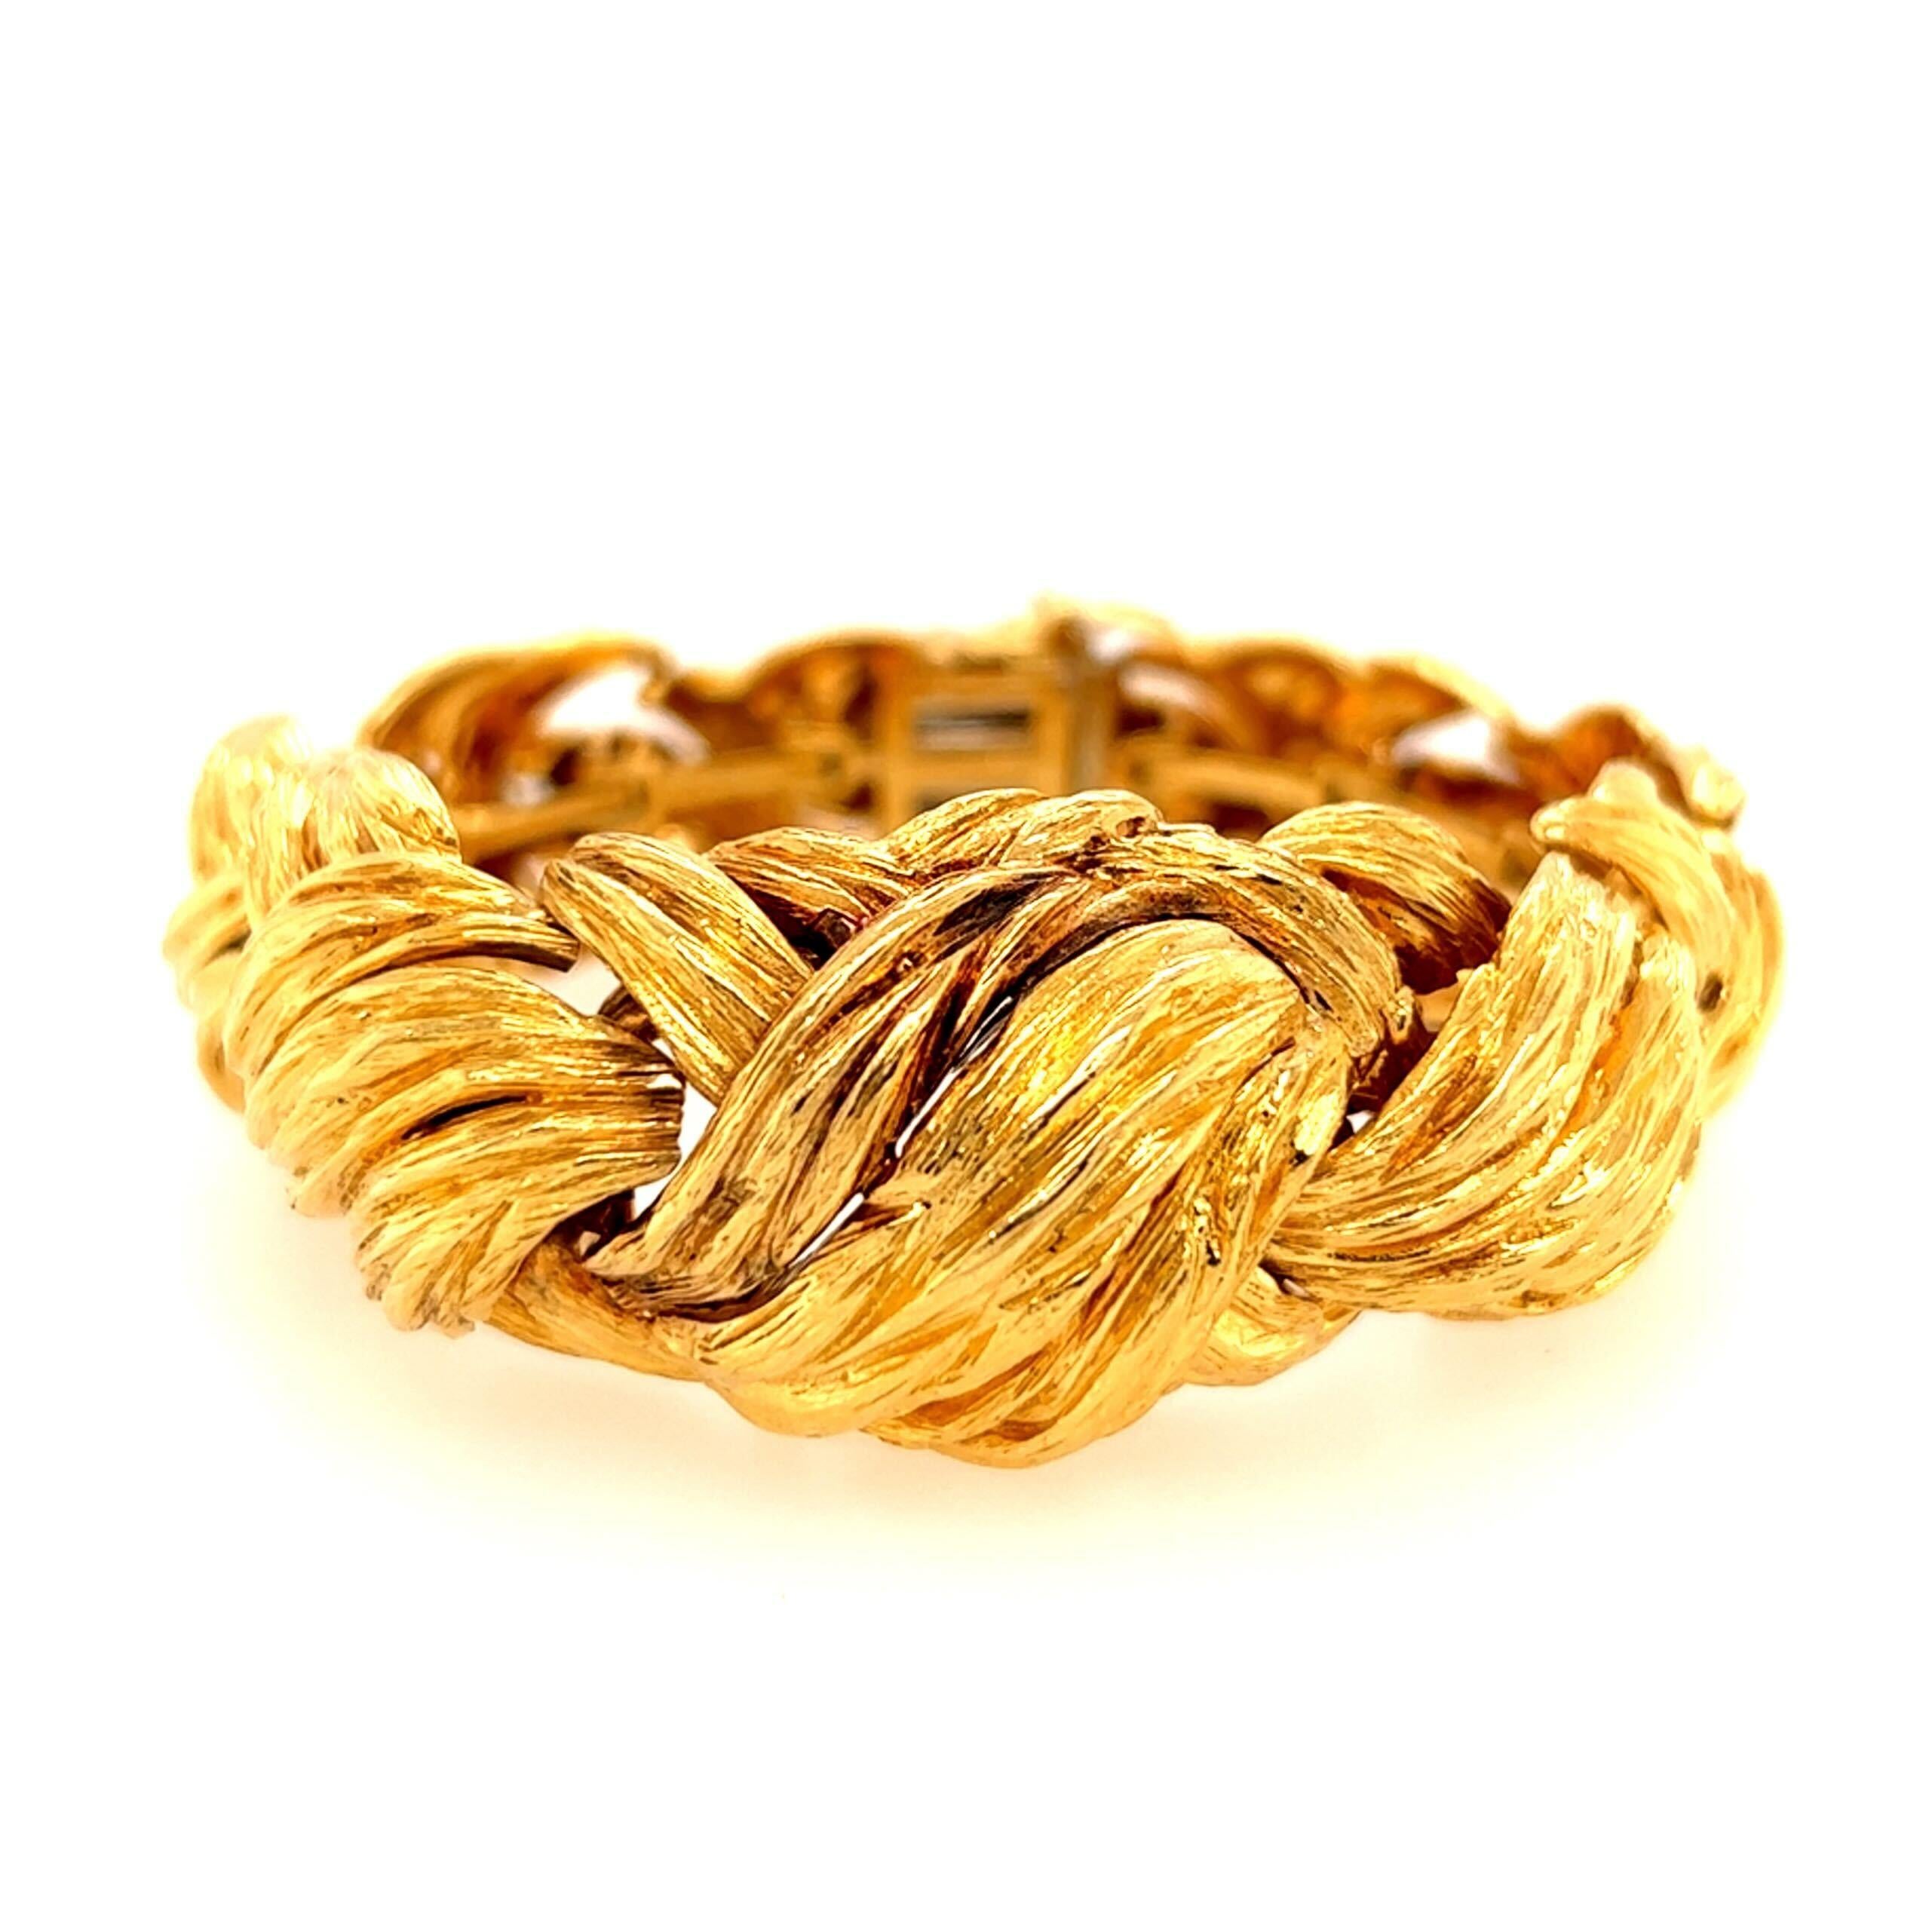 DAVID WEBB Gold Bracelet.